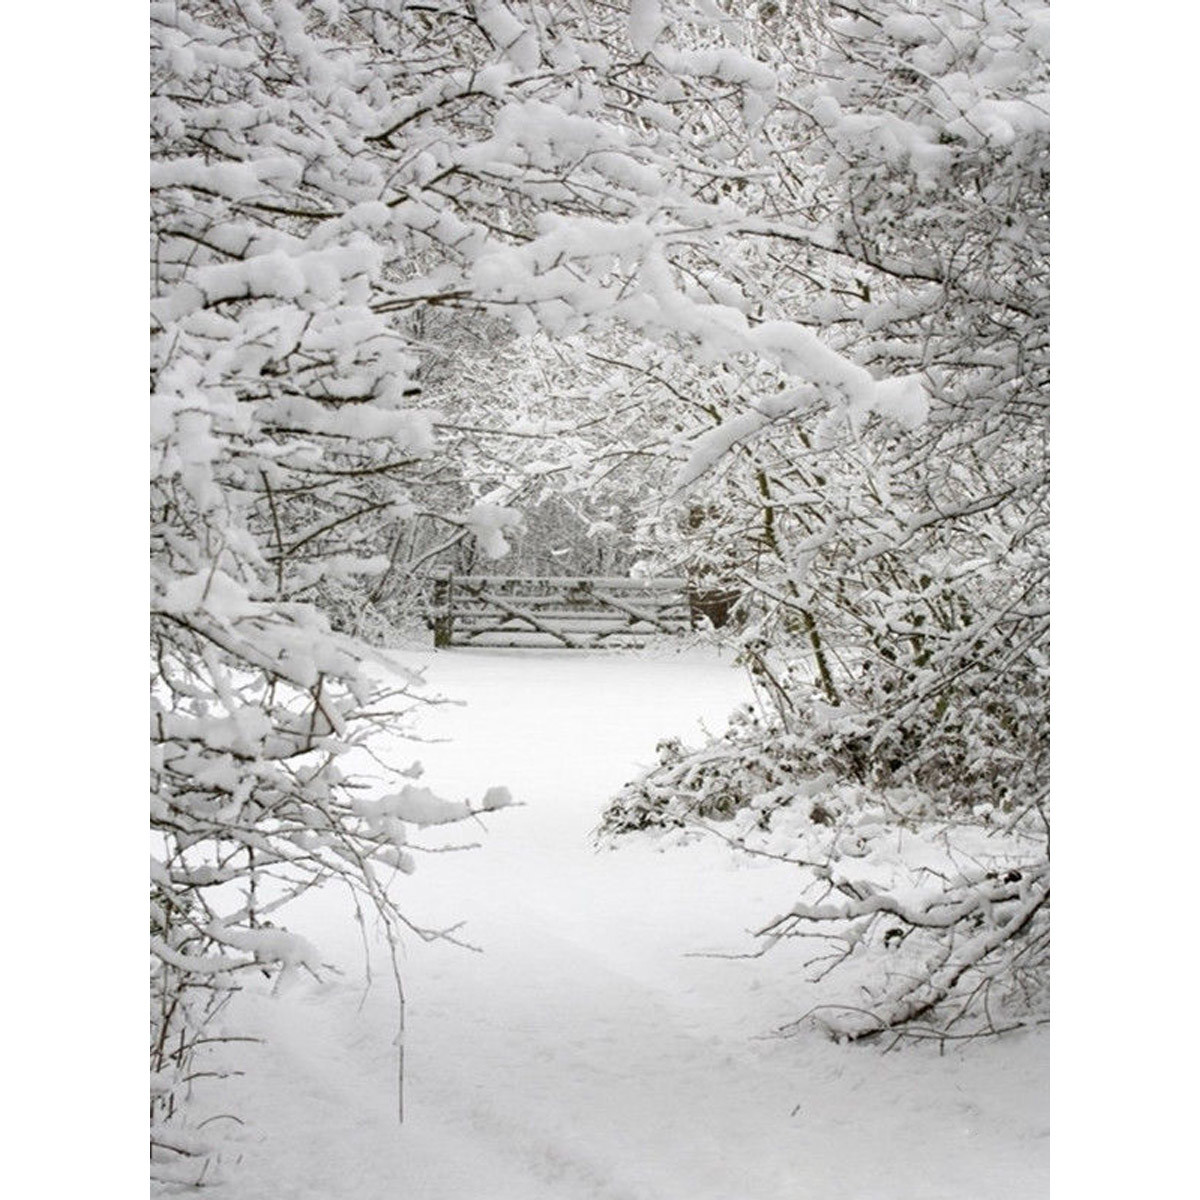 

3x5FT Vinyl Winter Forest Snow Photography Backdrop Background Studio Prop